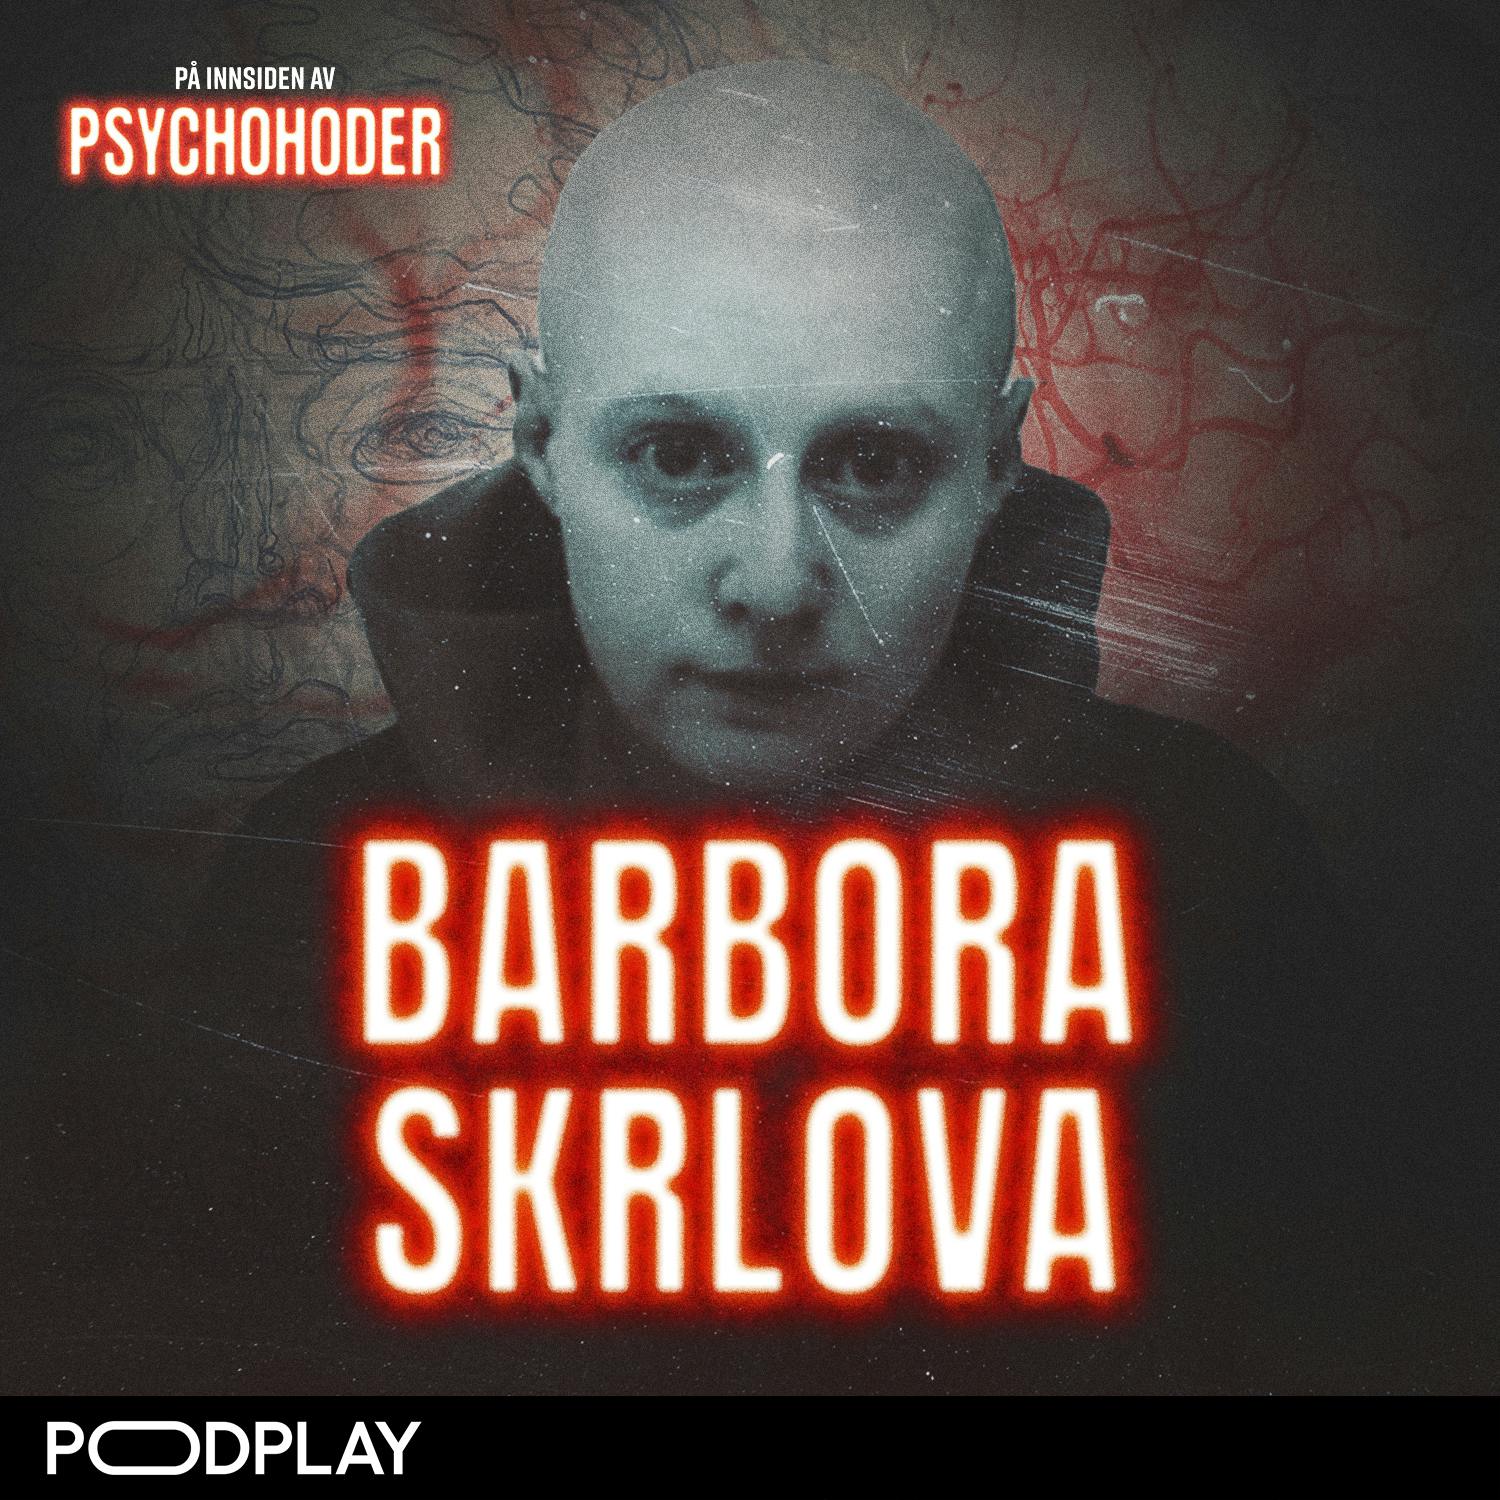 Barbora Skrlova – var «Adam» offer eller overgriper?